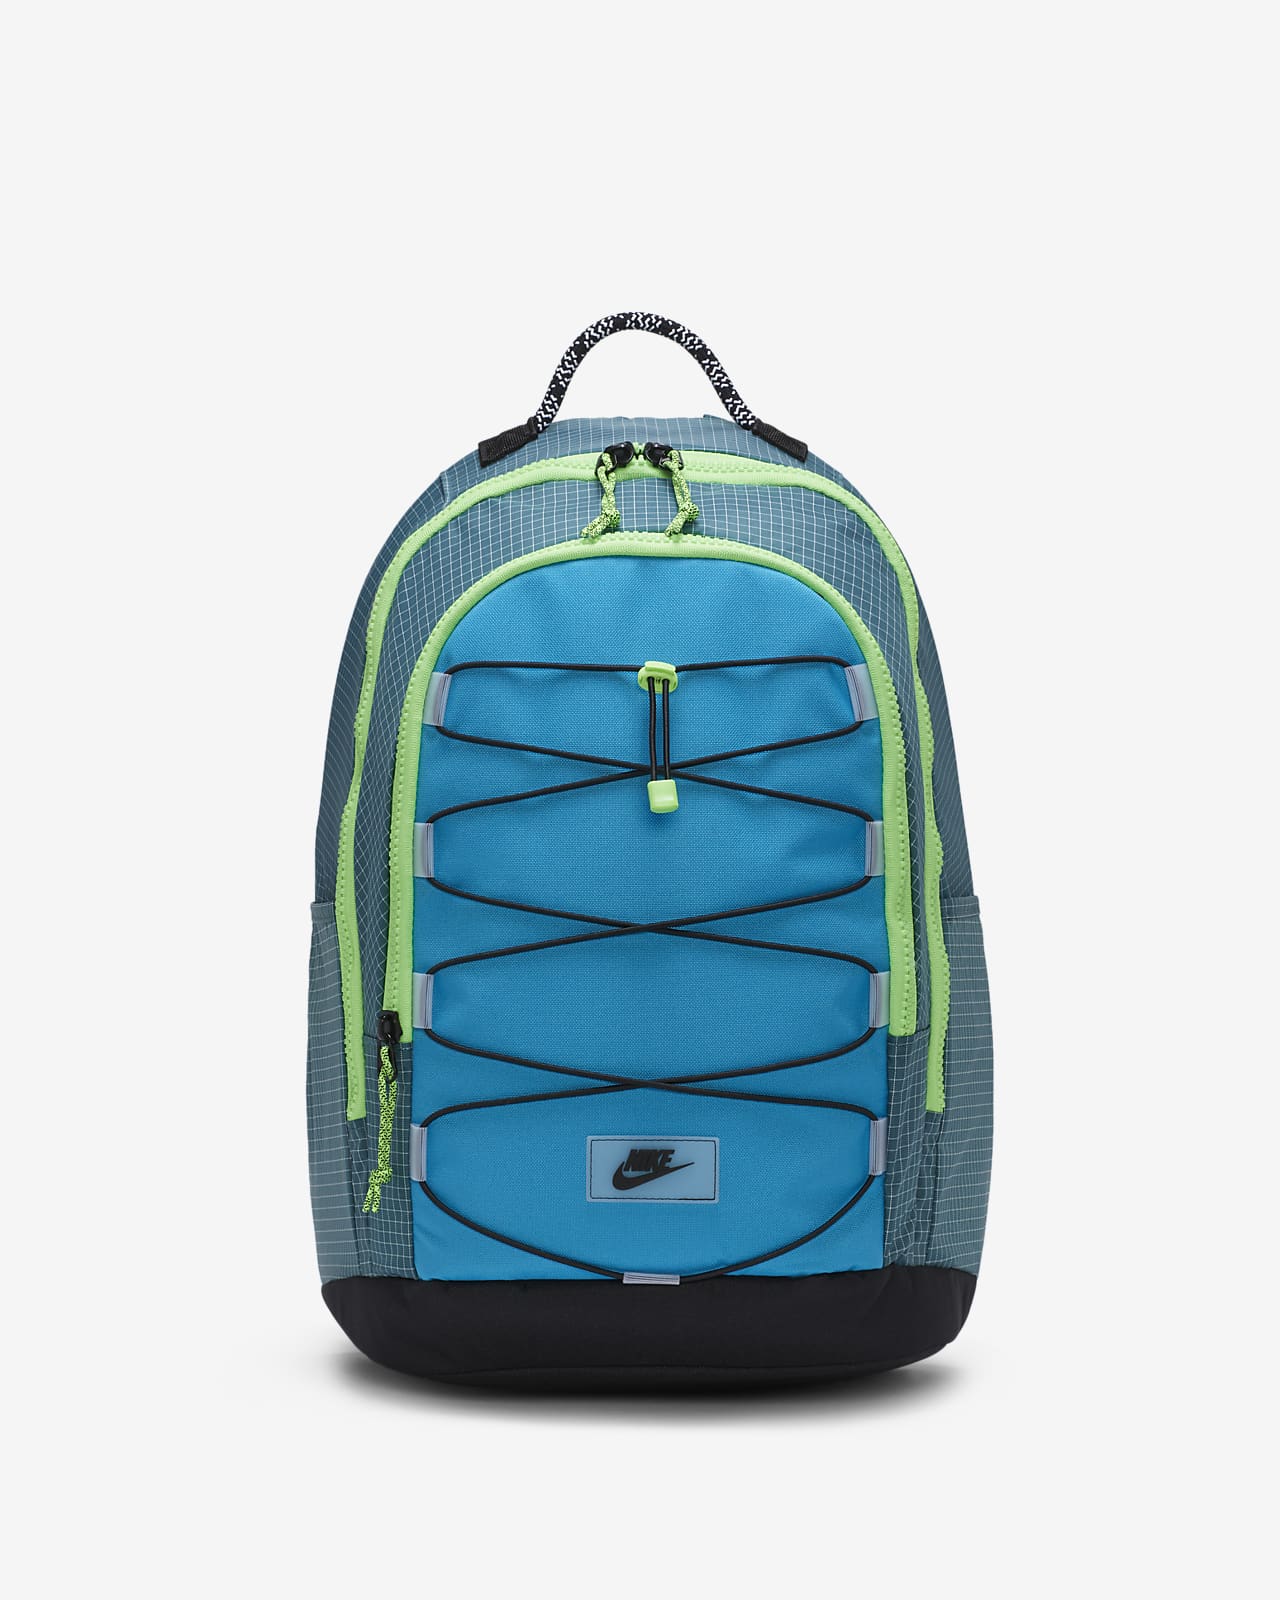 nike air hayward backpack